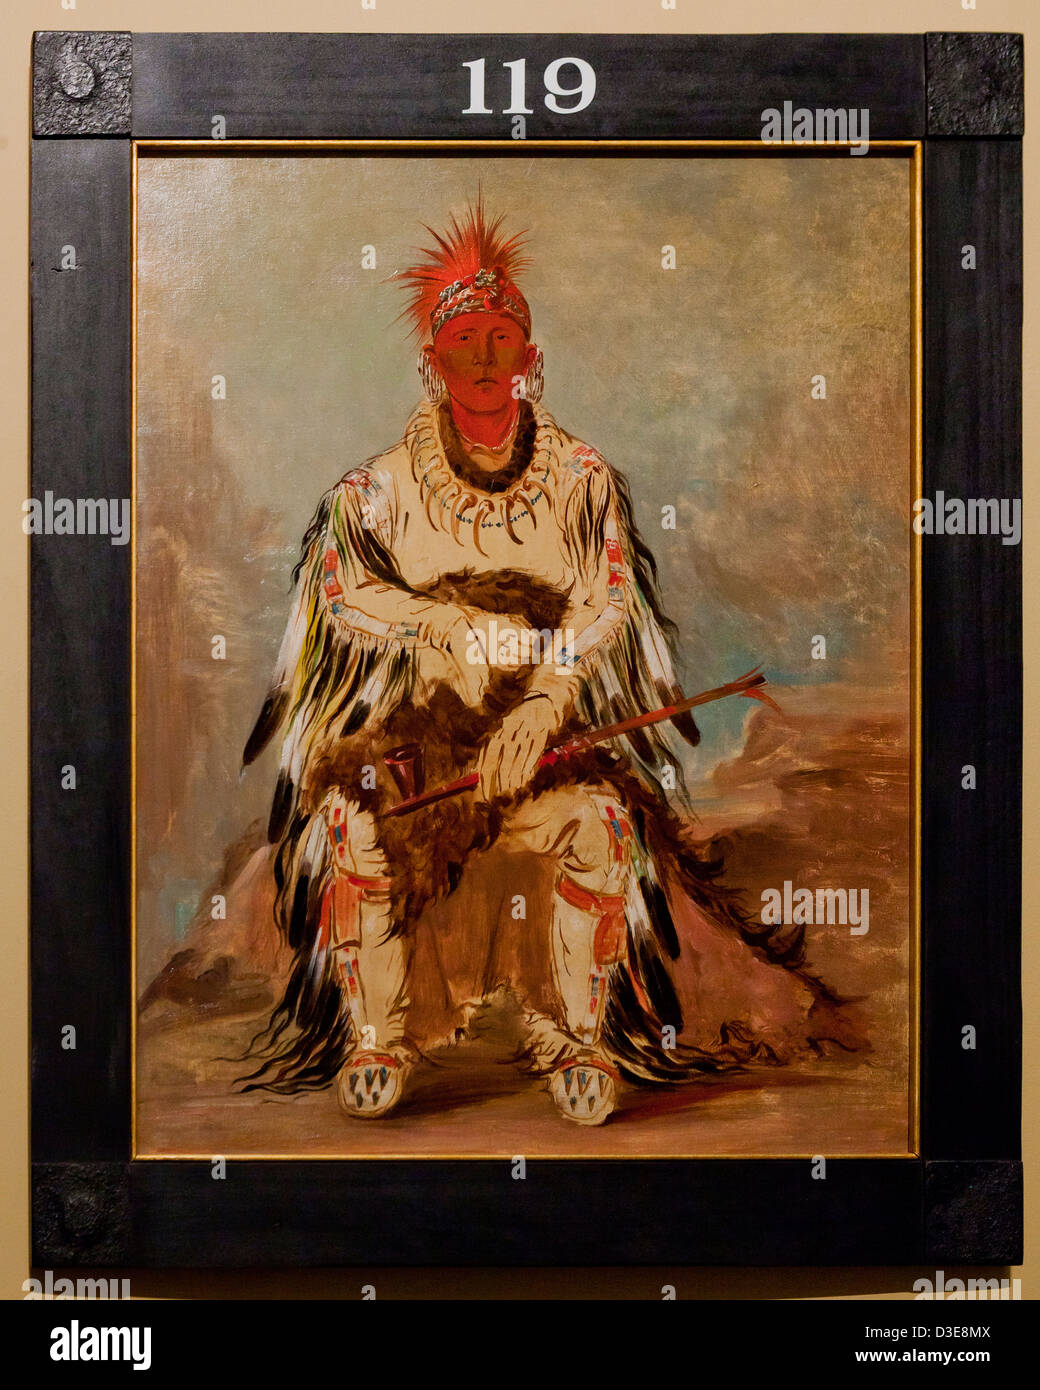 Keiner Weise Ke Sug Gah, Otoe Jiwere Nutachi Indian chief von George Catlin Stockfoto